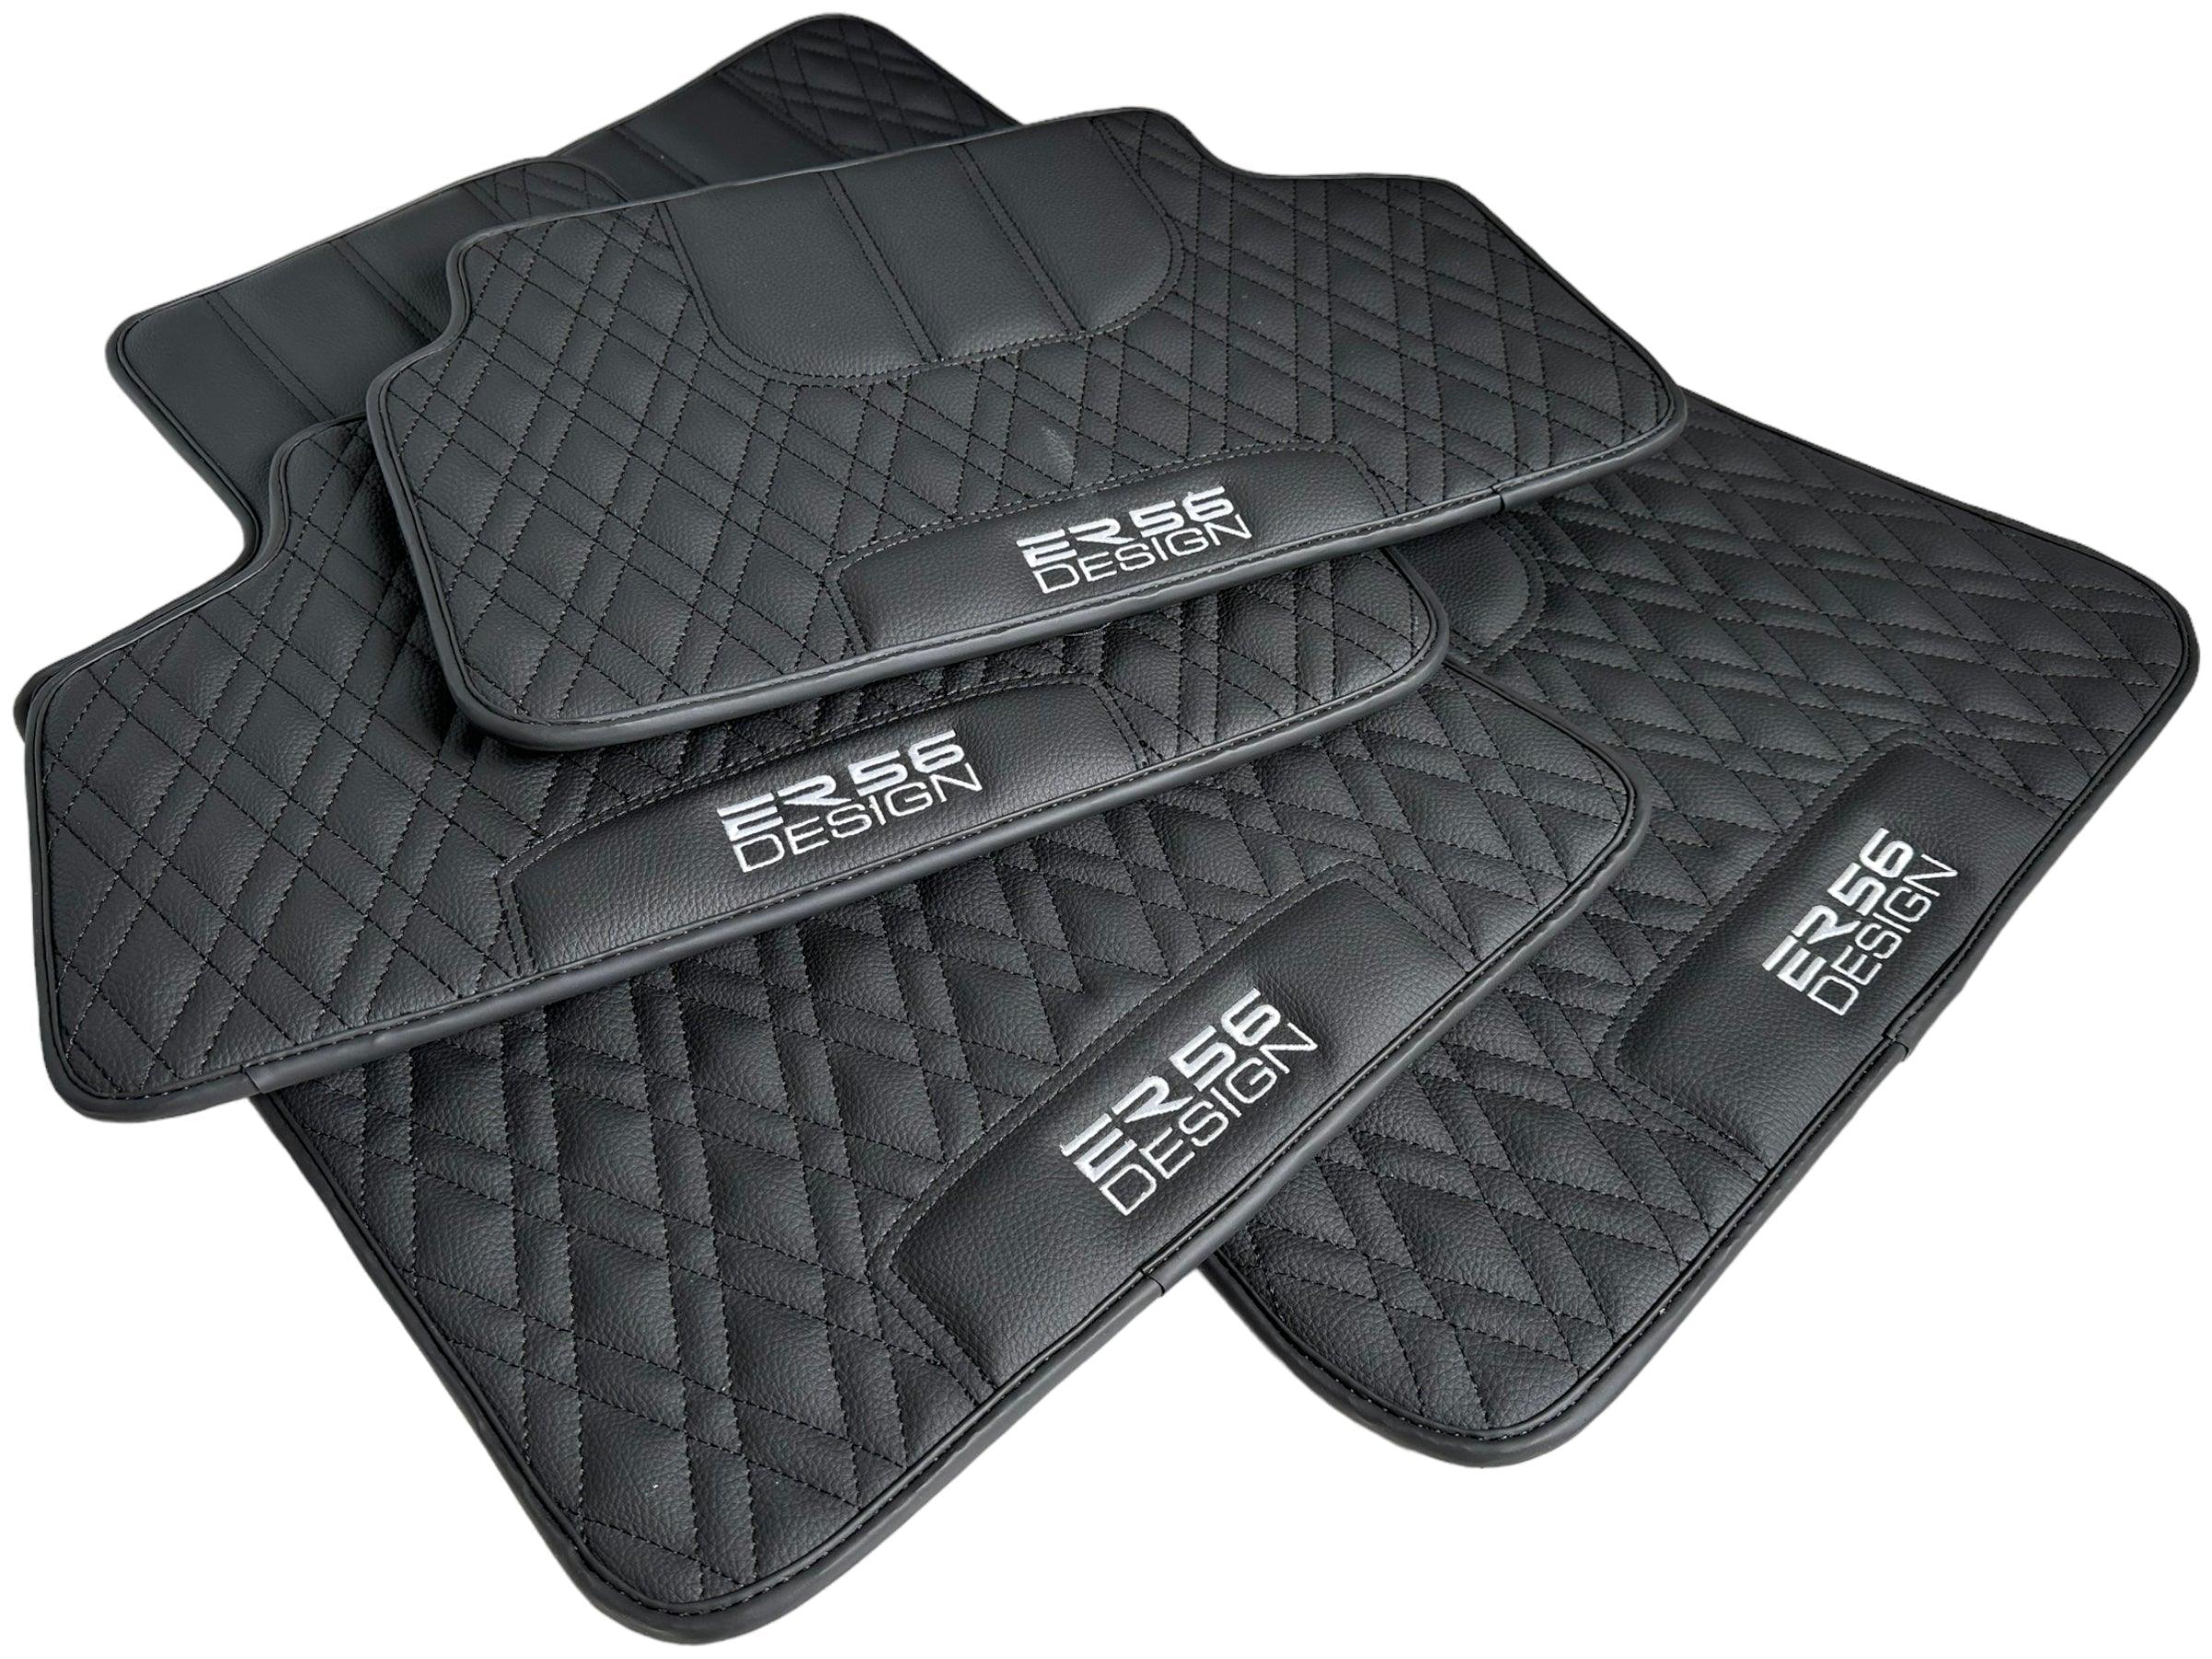 Floor Mats For BMW 8 Series E31 2-door Coupe Black Leather Er56 Design - AutoWin